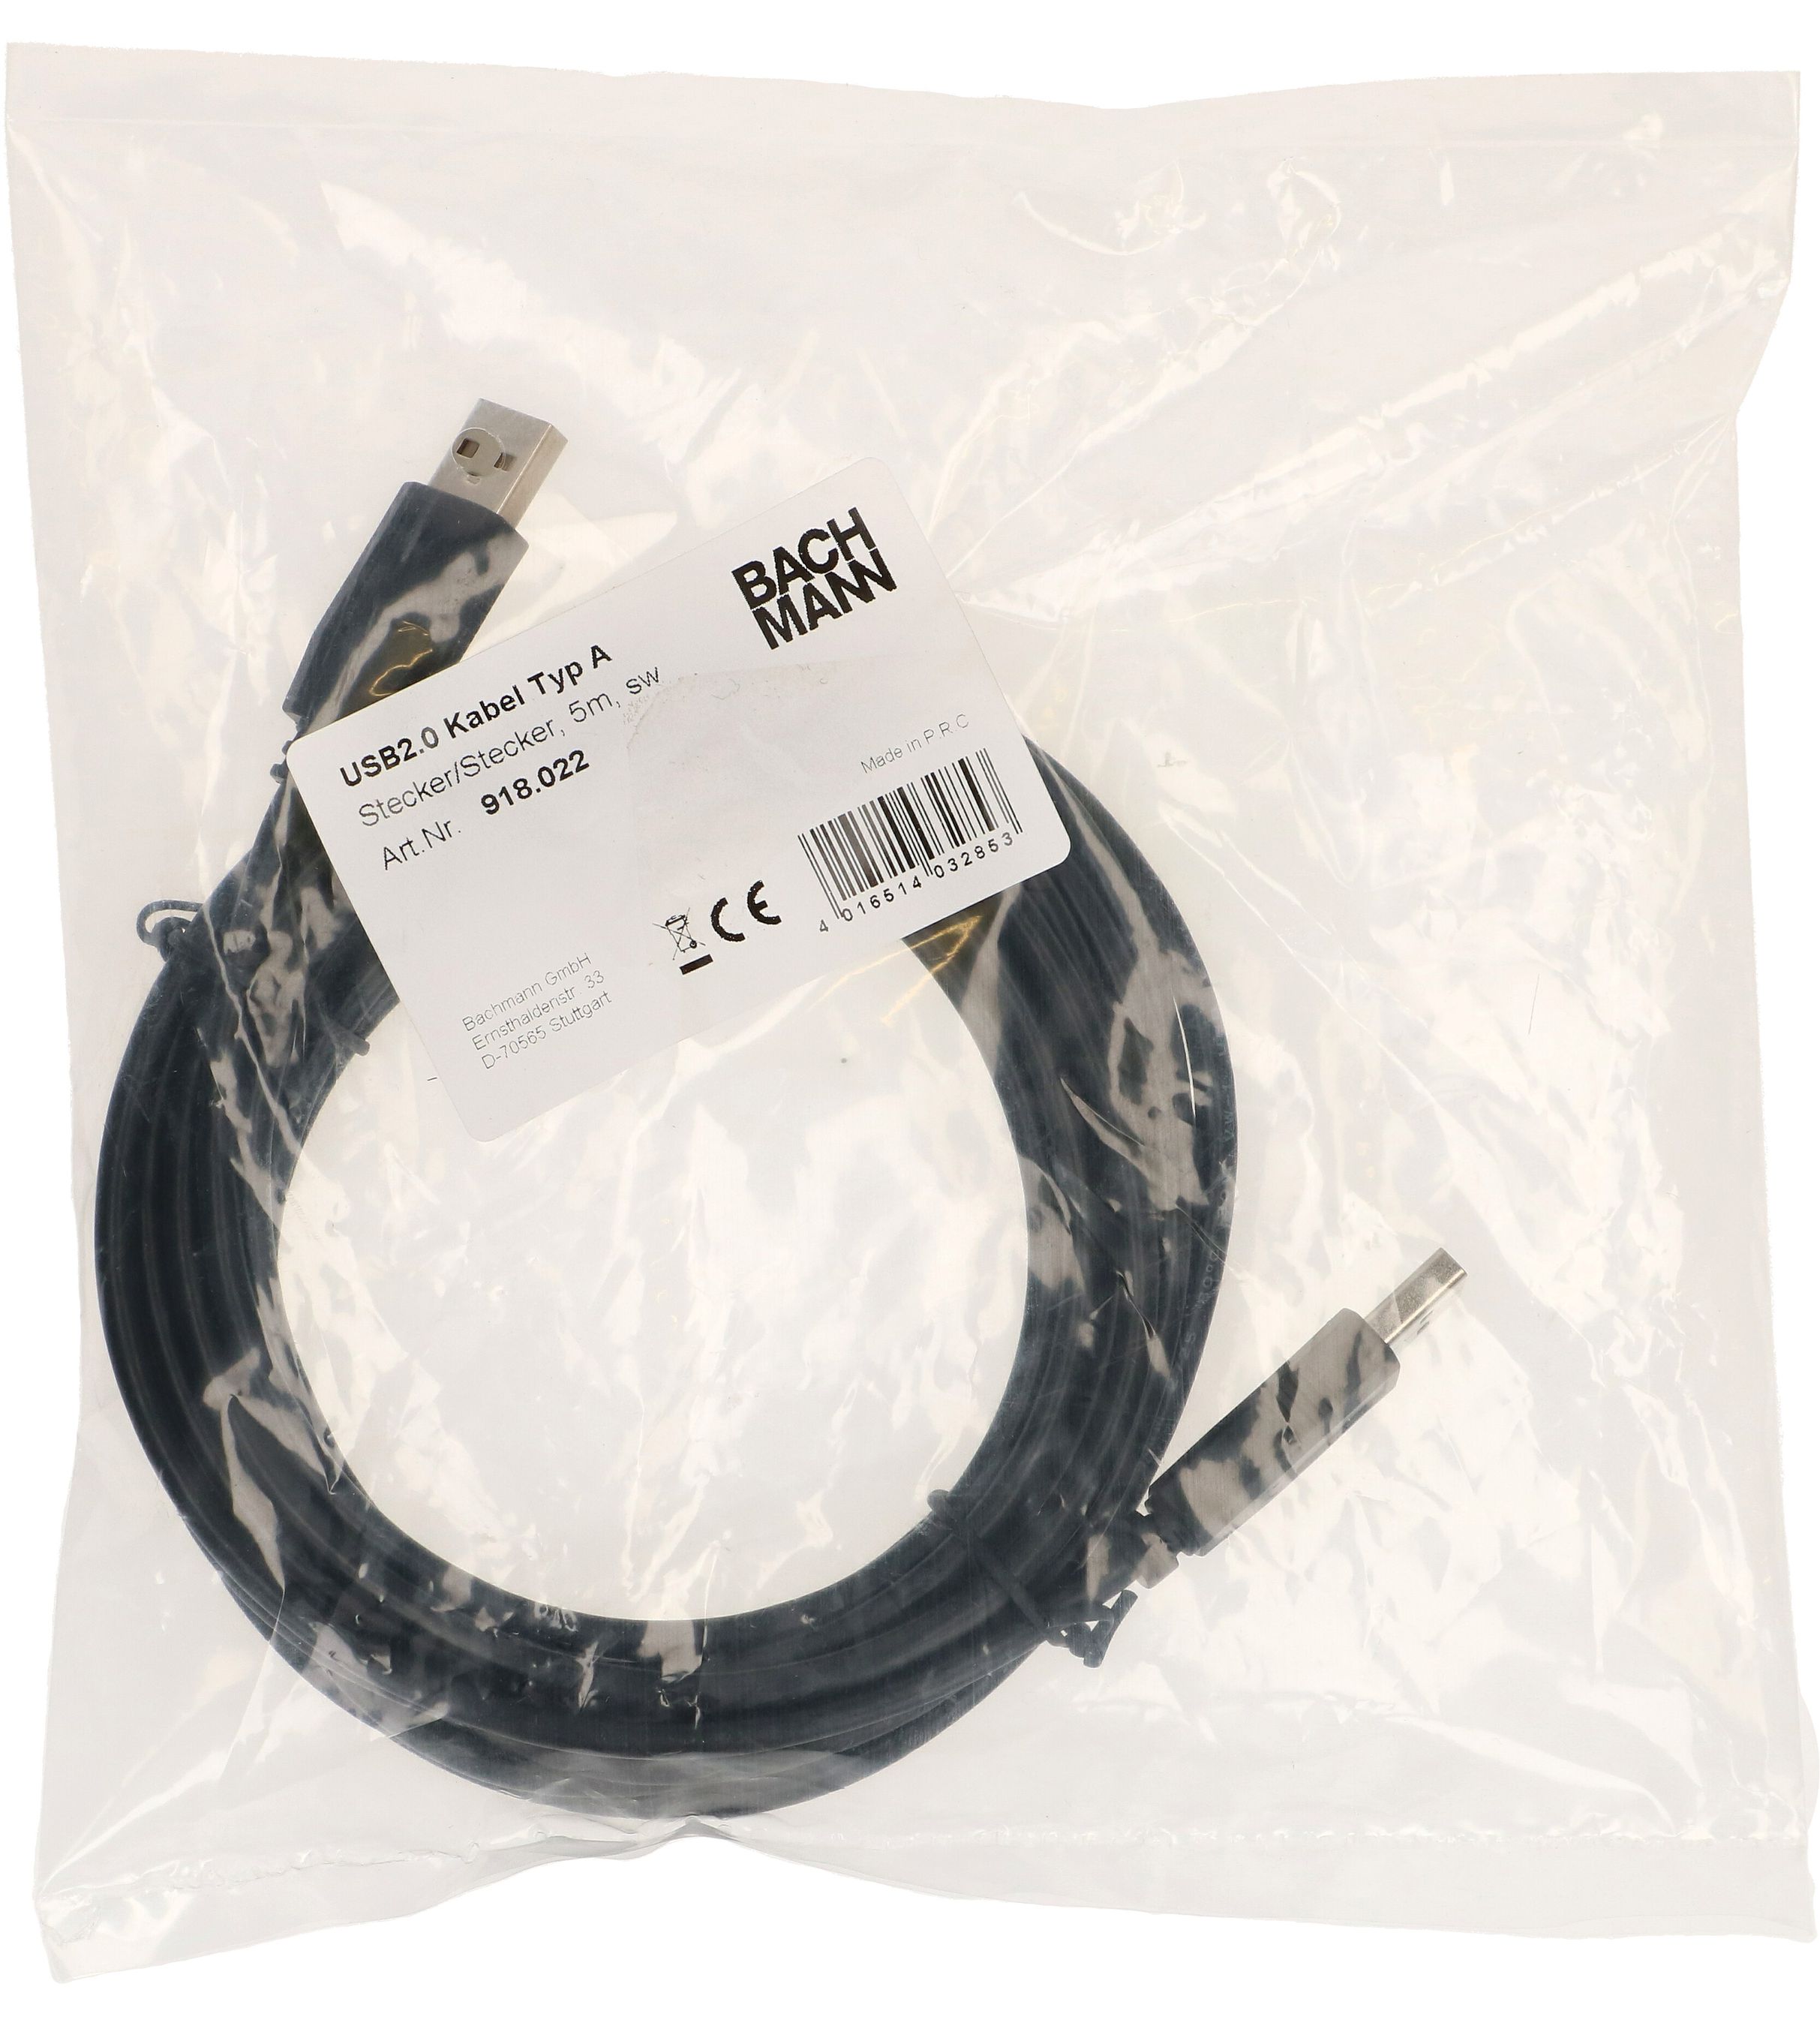 câble raccordement USB A/A 2.0 L=5.0m